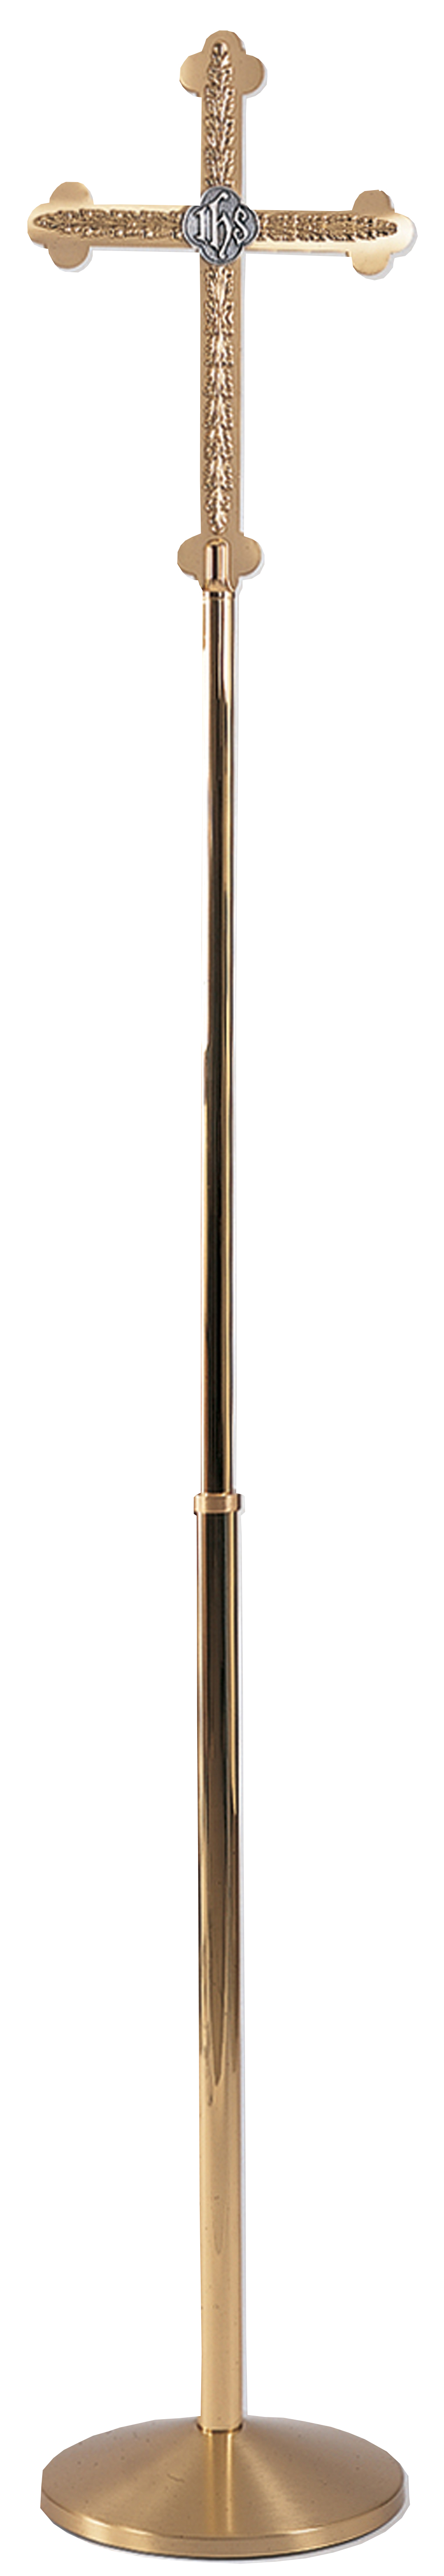 Processional Cross Filigree 82 inch Brass